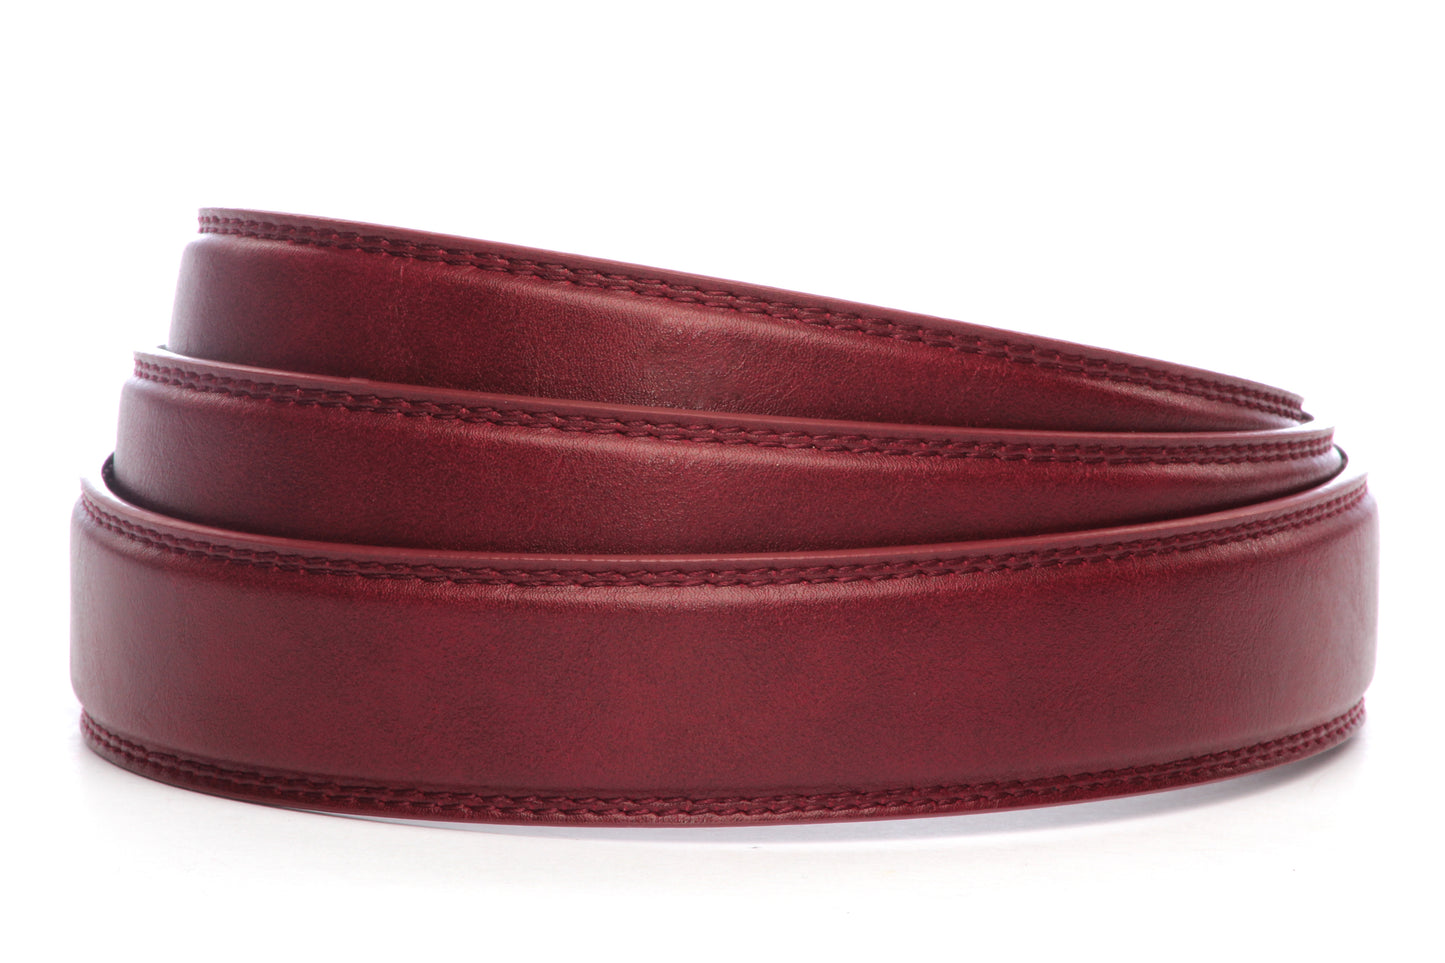 Men's vegan microfiber belt strap in cranberry with a 1.25-inch width, formal look